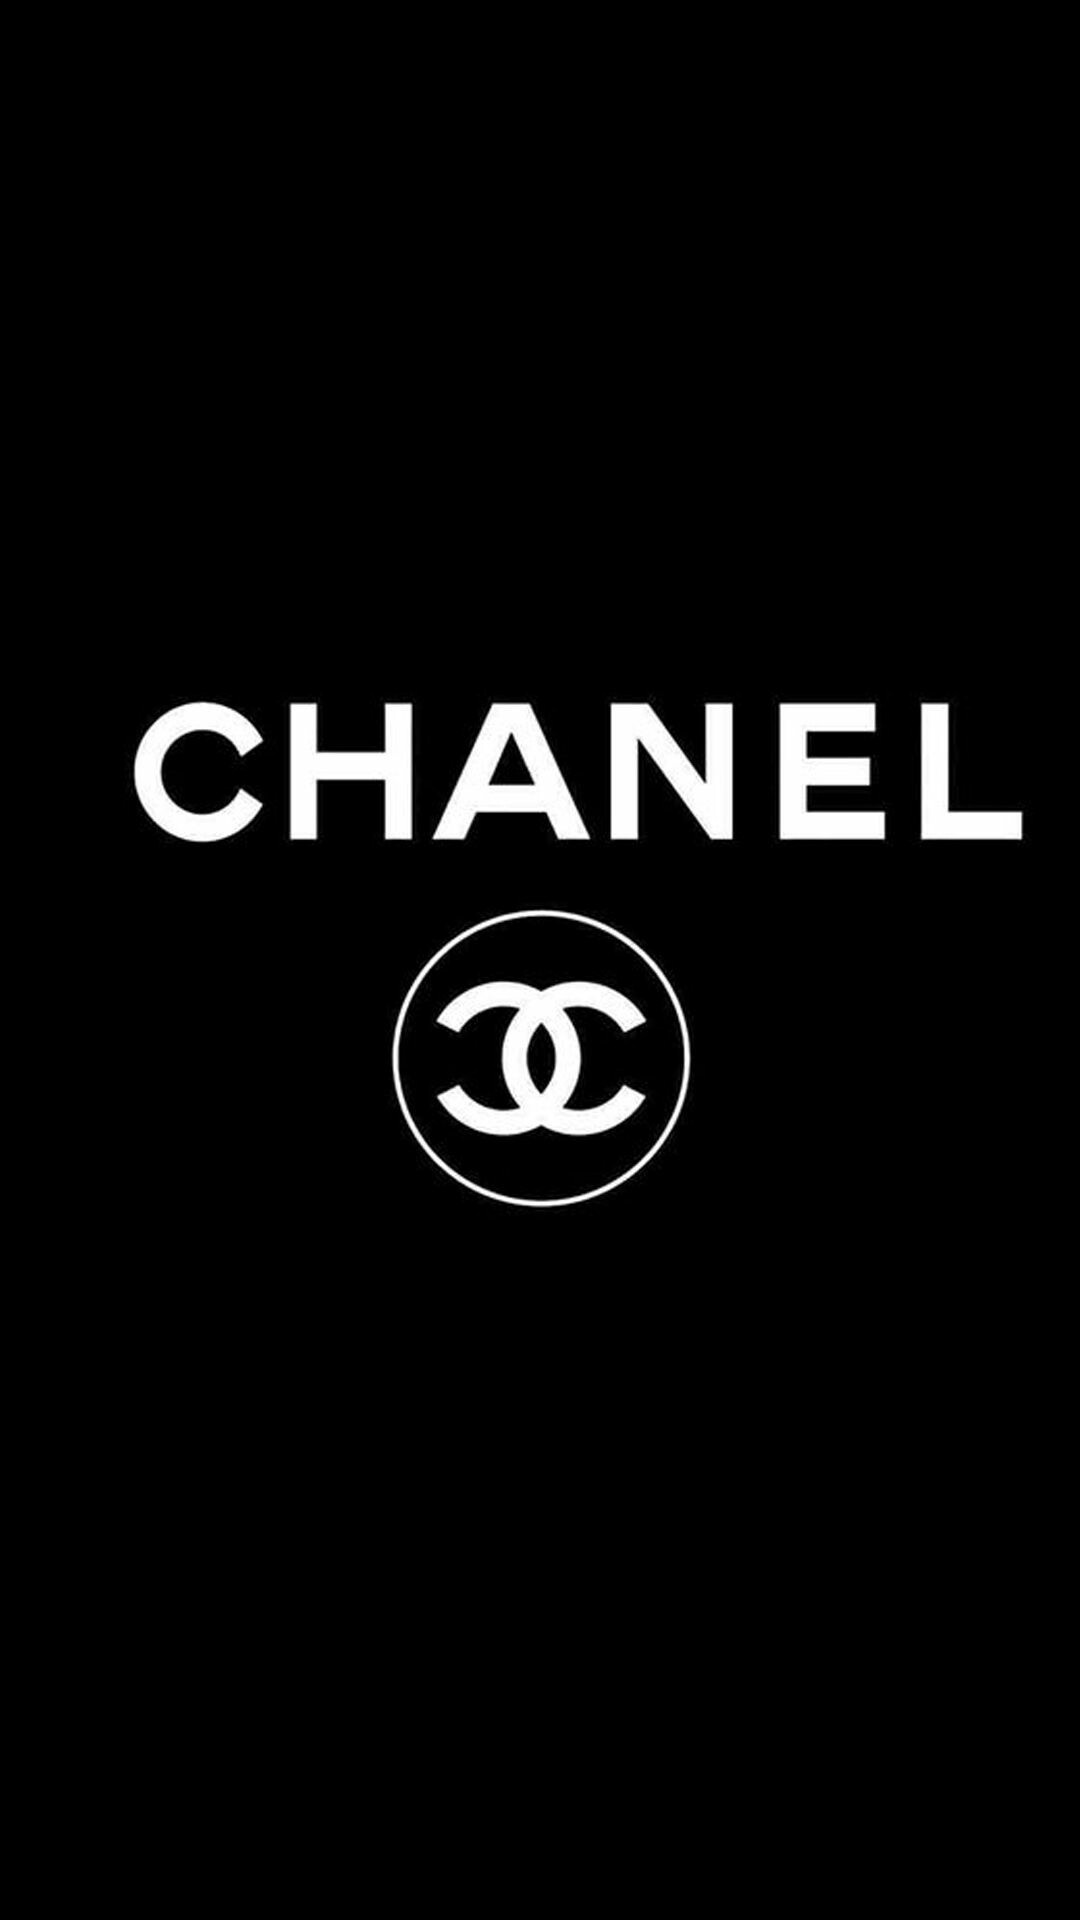 HD wallpaper, Stylish Iphone Wallpapers, Coco Chanel Logo, Phone Full Hd Chanel Wallpaper Image, Chanel Fashion, 1080X1920 Full Hd Phone